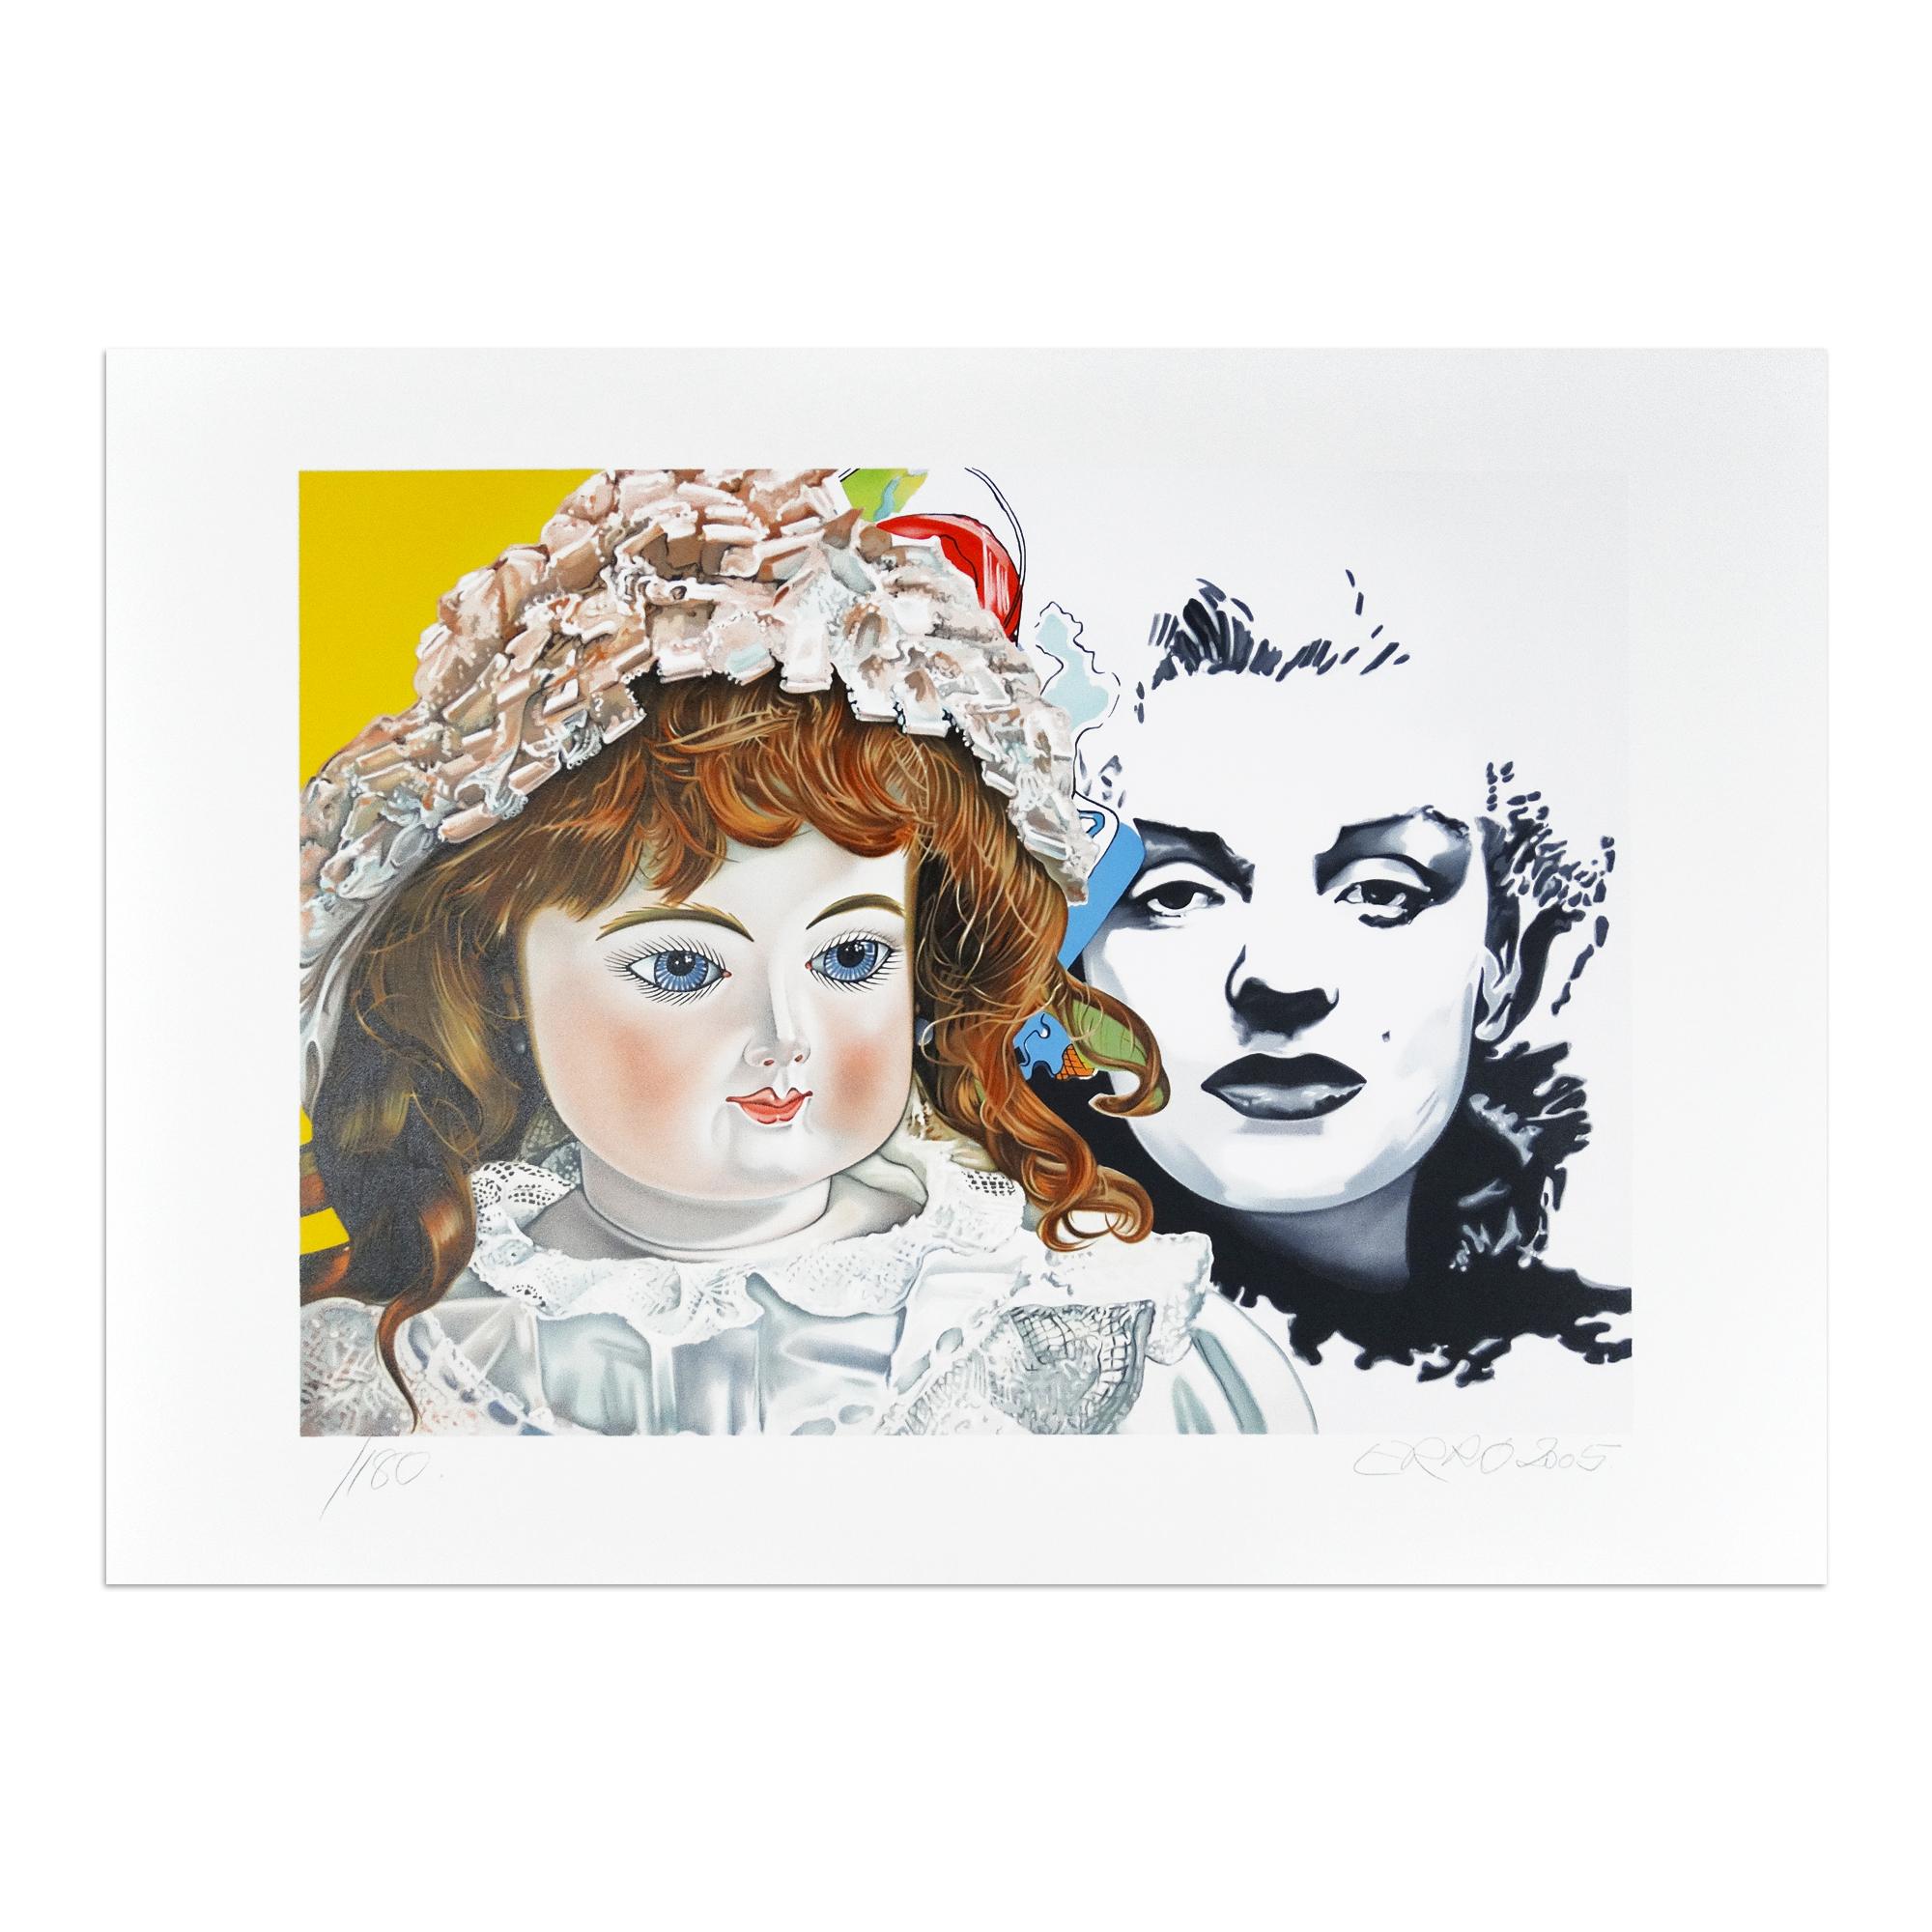 Erró, Marilyn Monroe - Lithograph, Contemporary Pop Art, Portrait, Signed Print